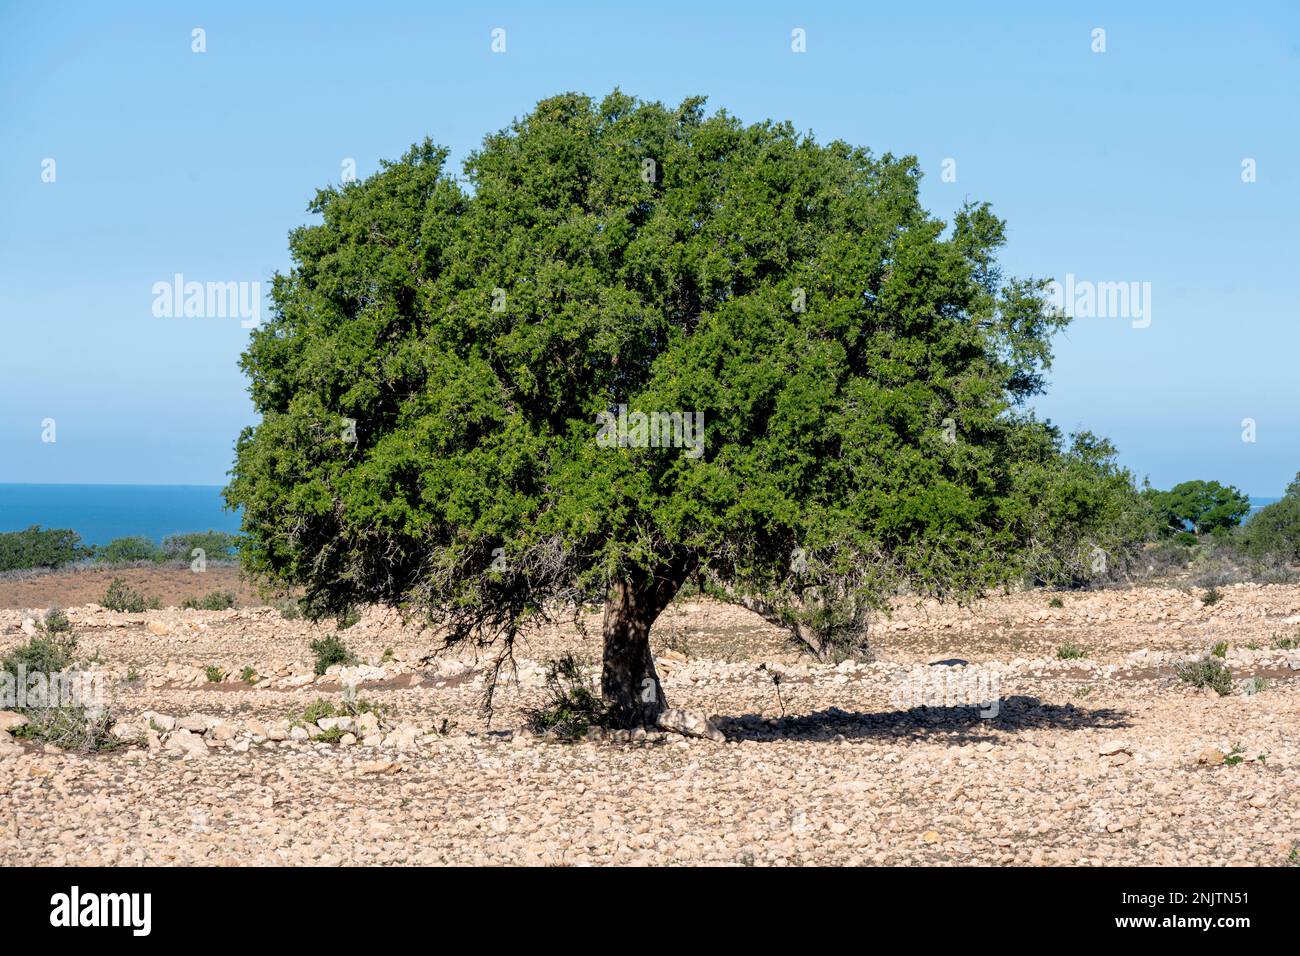 Afrika, Marokko, Essaouira, Arganbaum oder die Arganie (Argania spinosa) Stock Photo